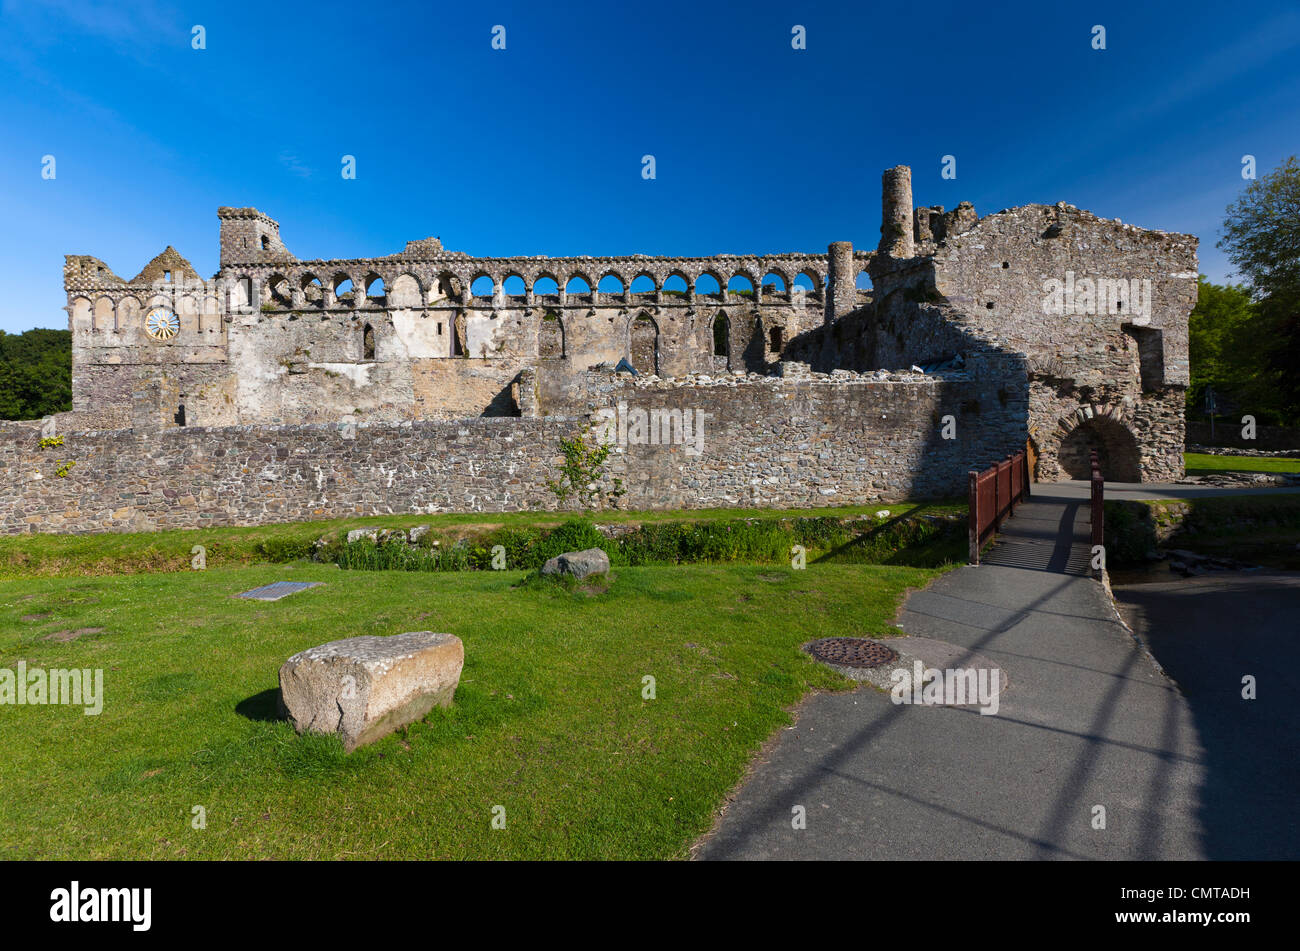 Ruin of bishop's palace, St. David's, Pembrokeshire, Wales, UK, Europe Stock Photo